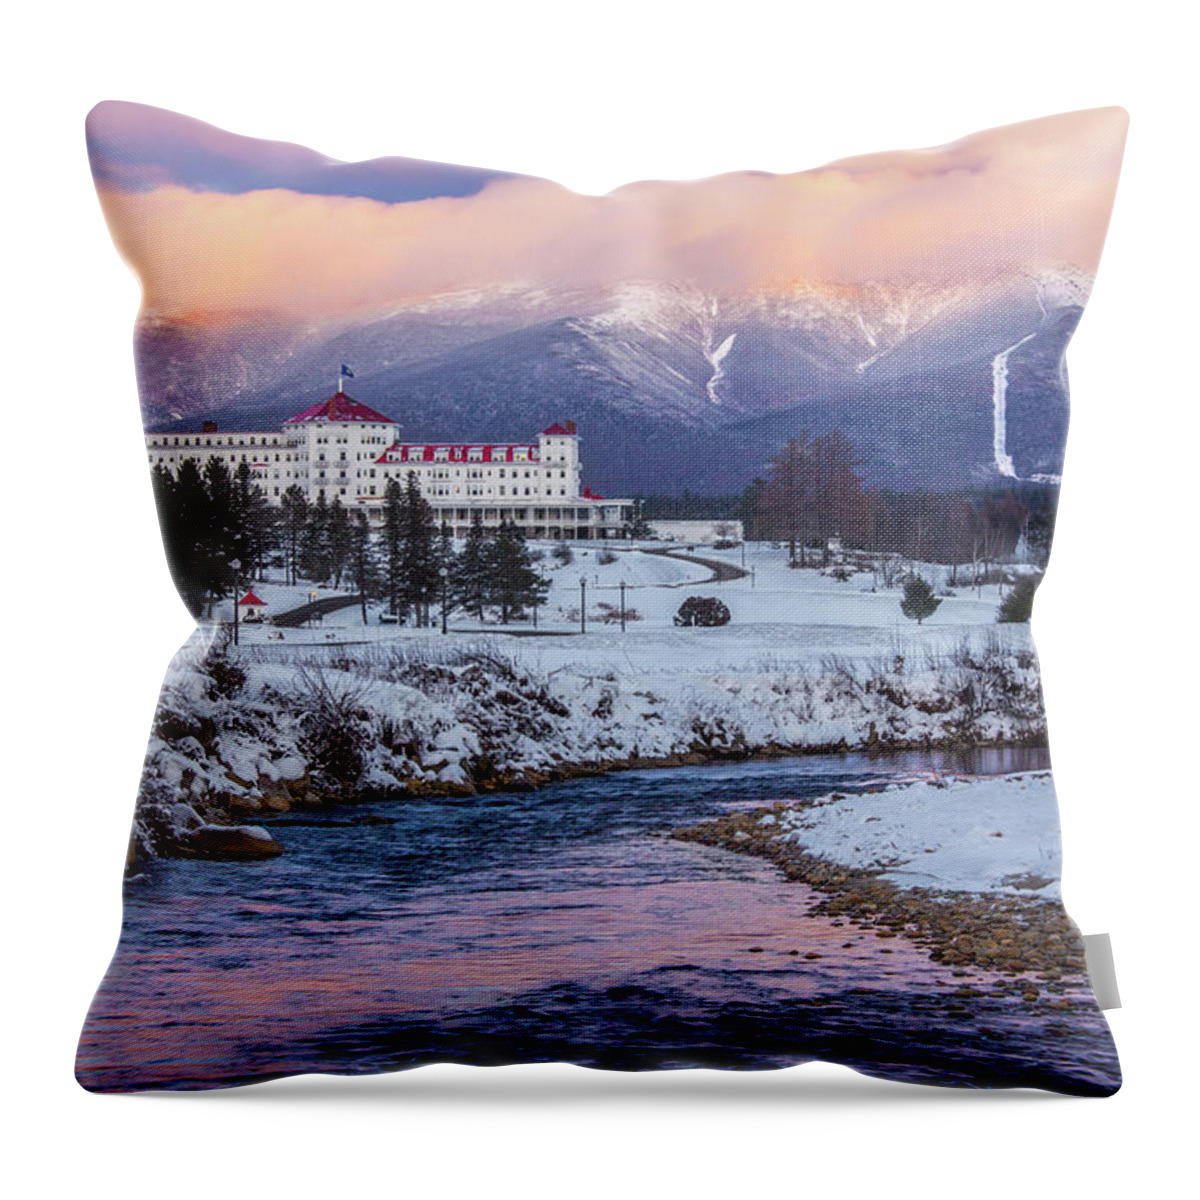 Alpenglow Throw Pillow featuring the photograph Mount Washington Hotel Alpenglow by Chris Whiton